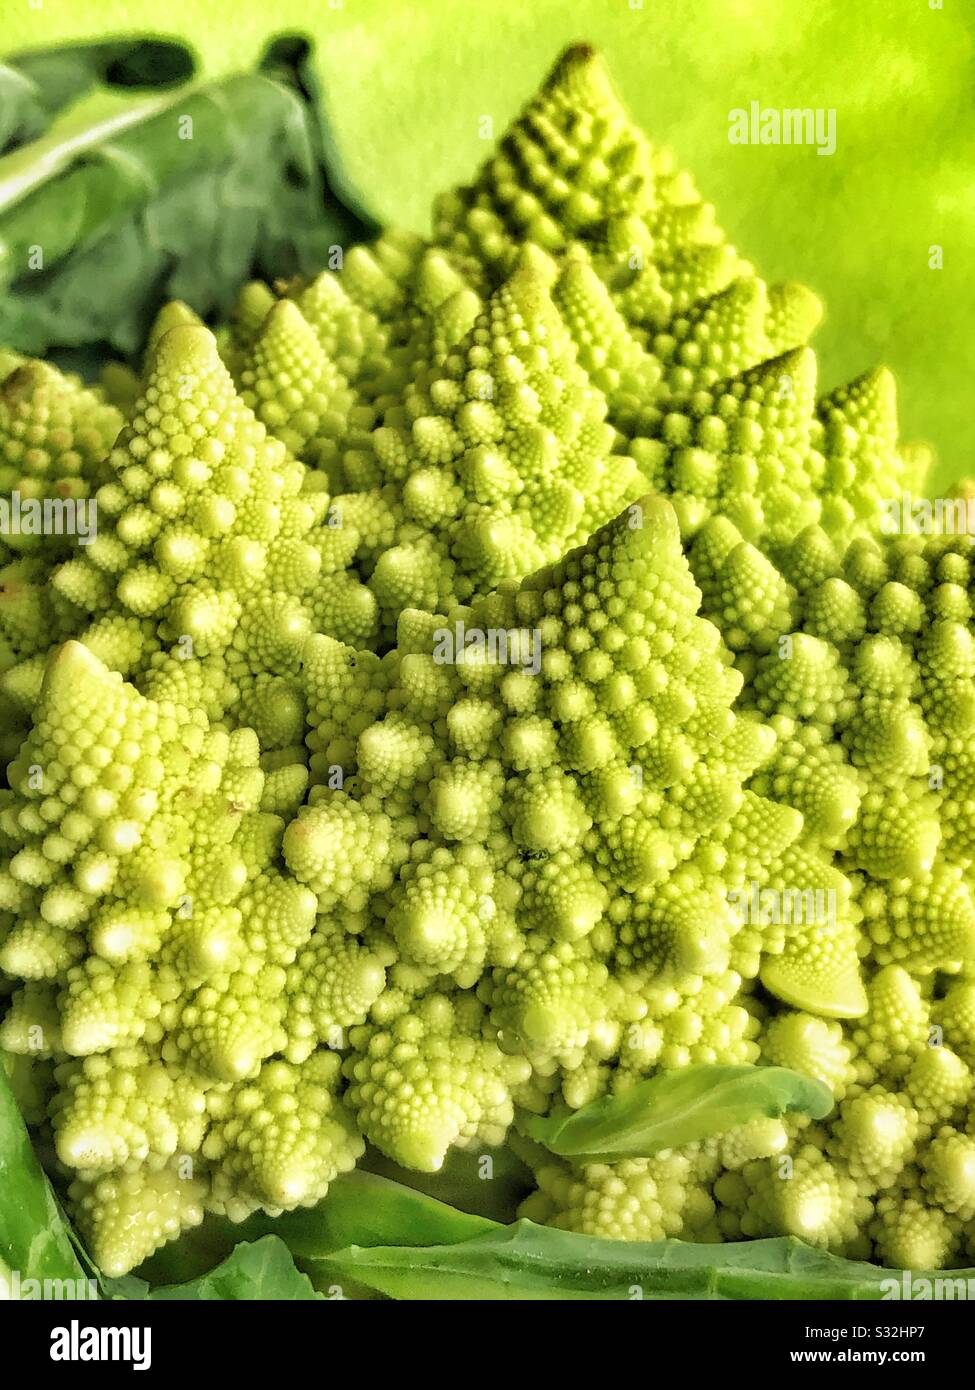 Fresh green Spirals of Romanesco broccoli close up Stock Photo